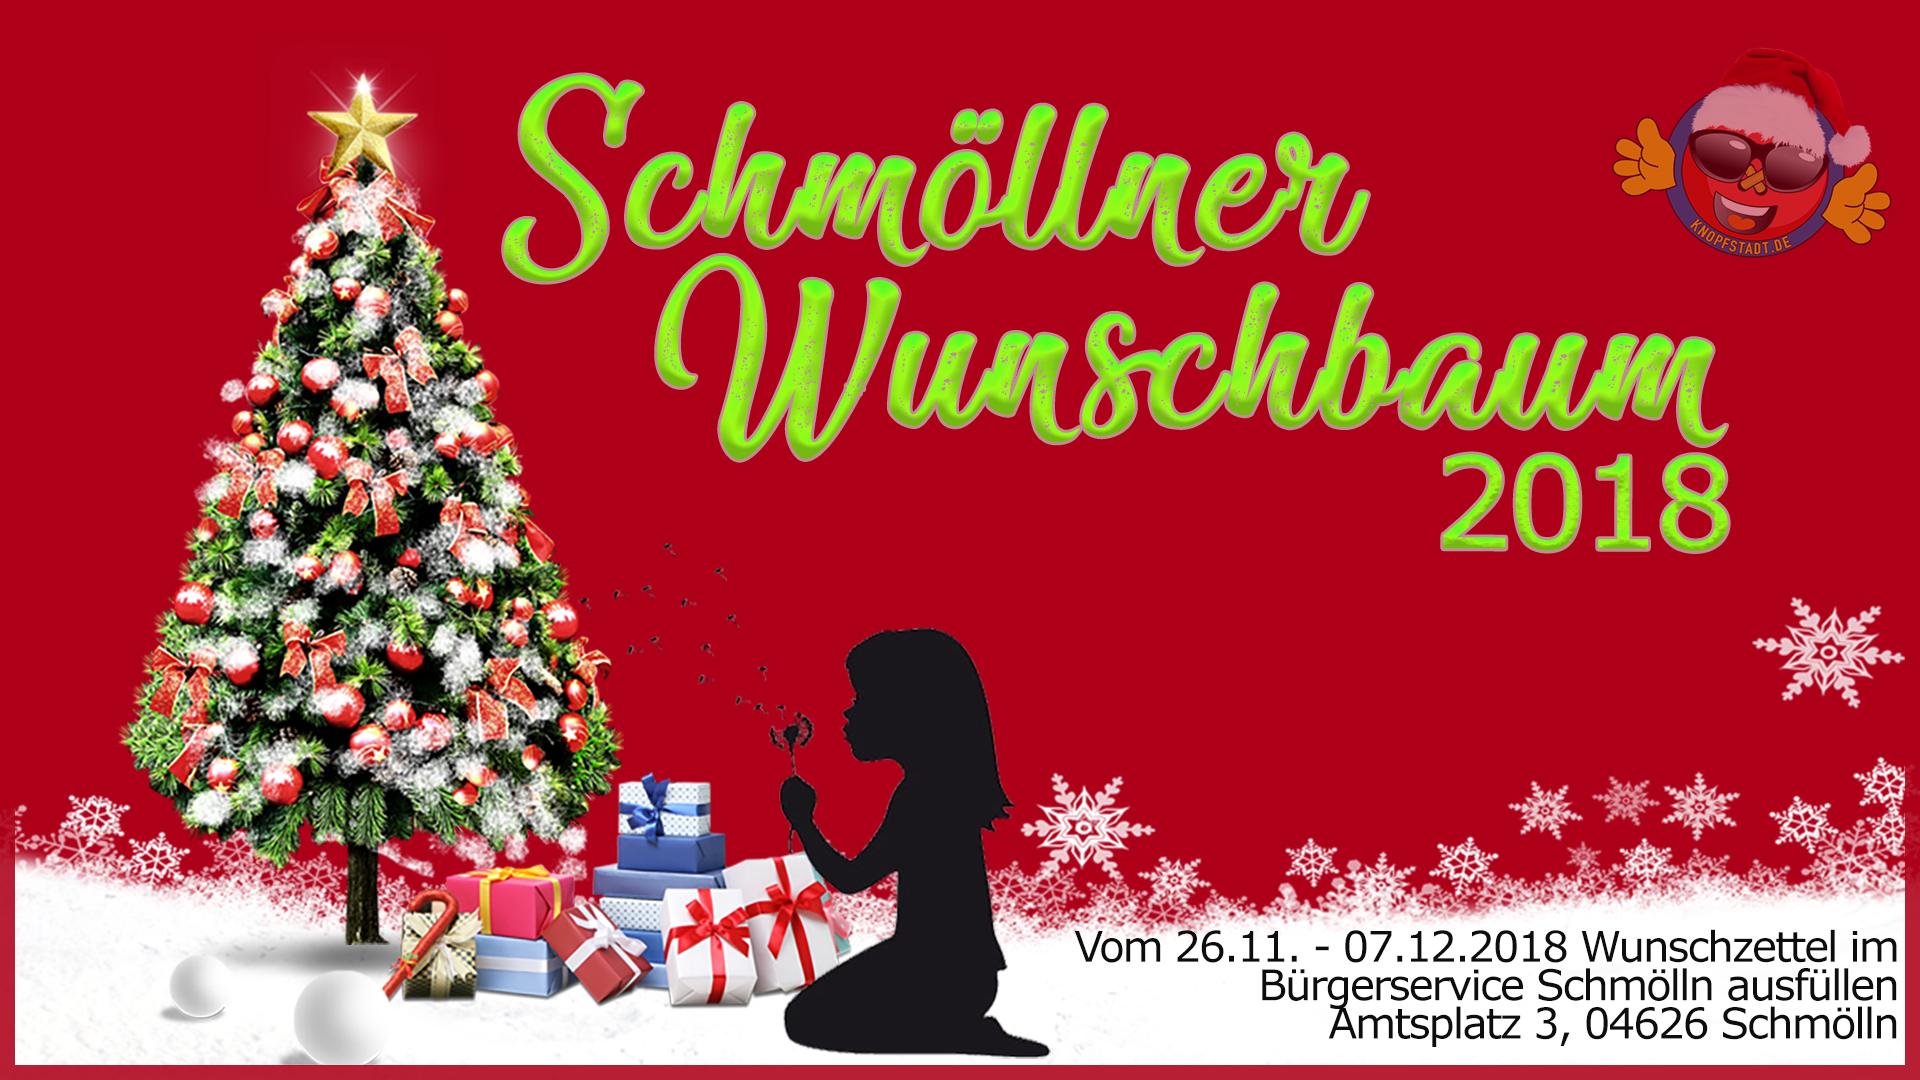 Wunschbaum Schmölln 2018 - Knopfstadt.de